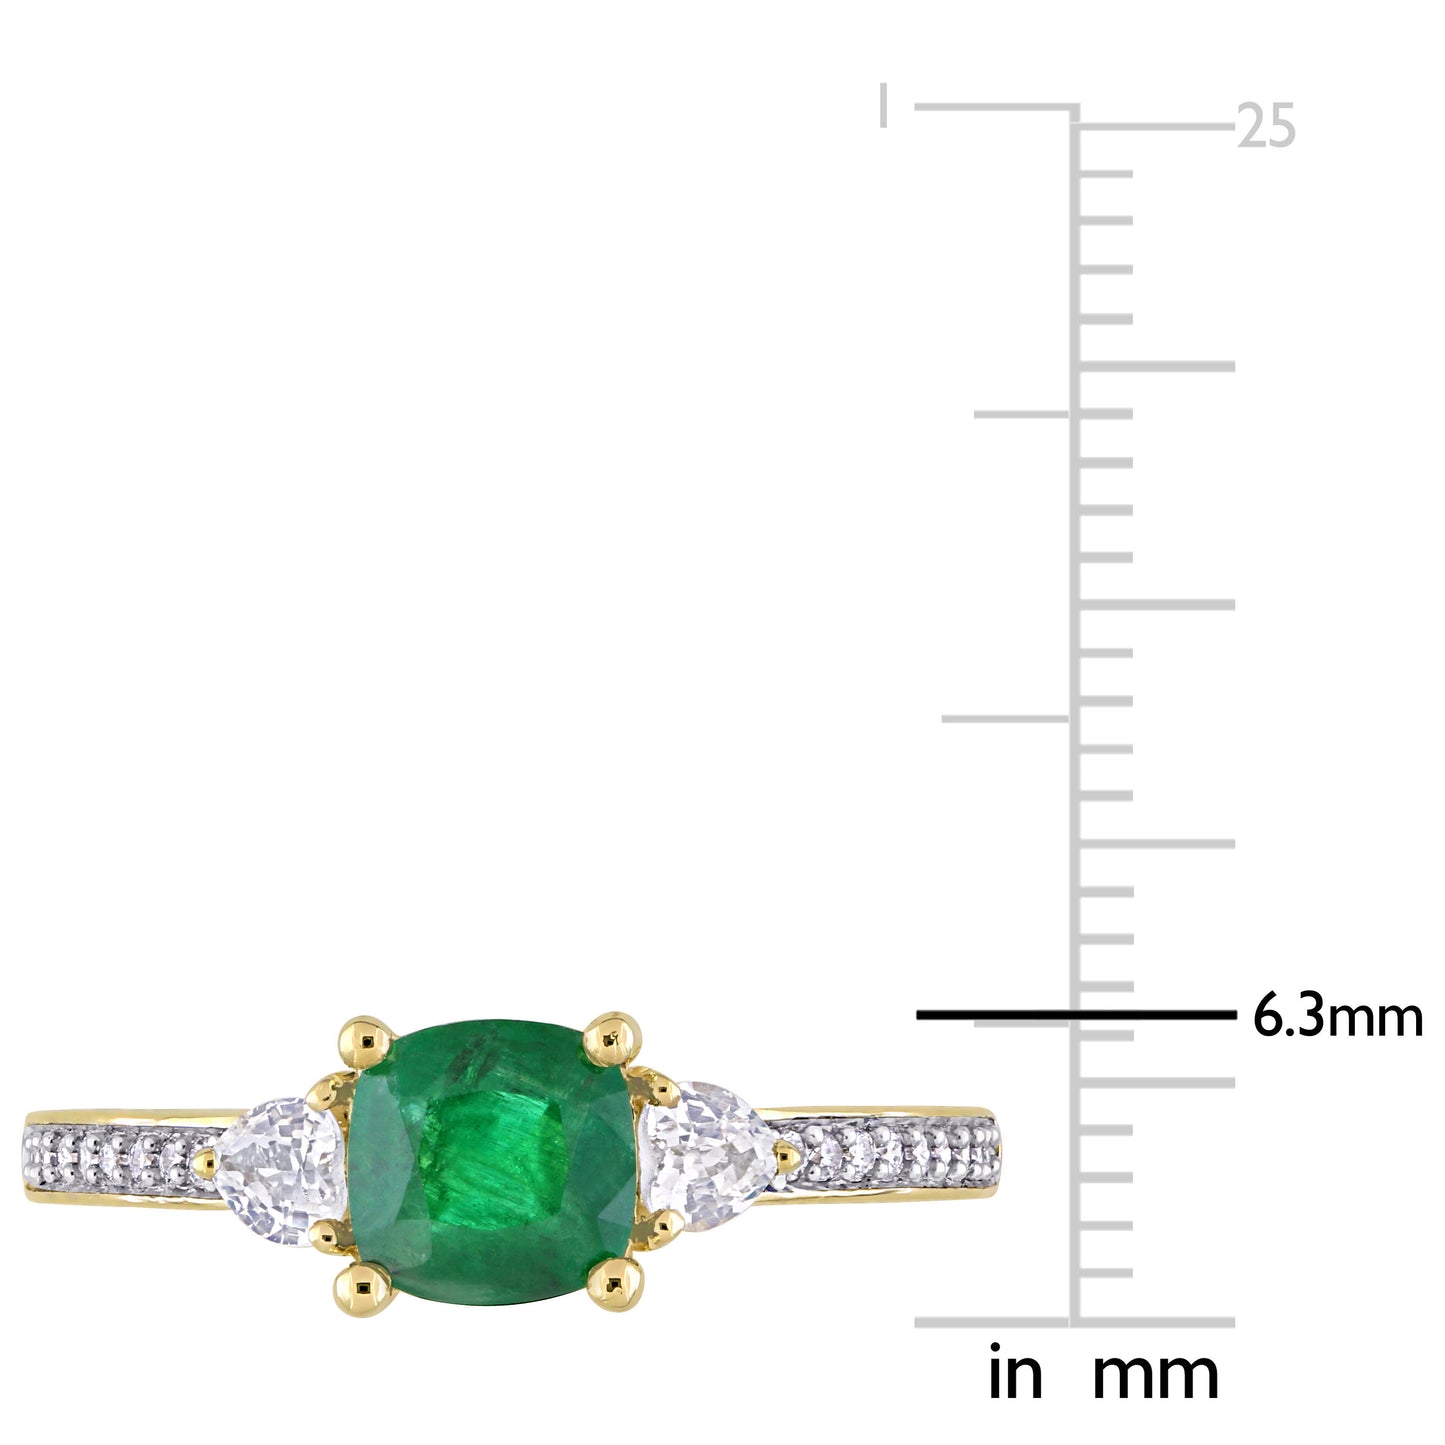 Emerald & White Sapphire & Diamond Ring in 14k Yellow Gold